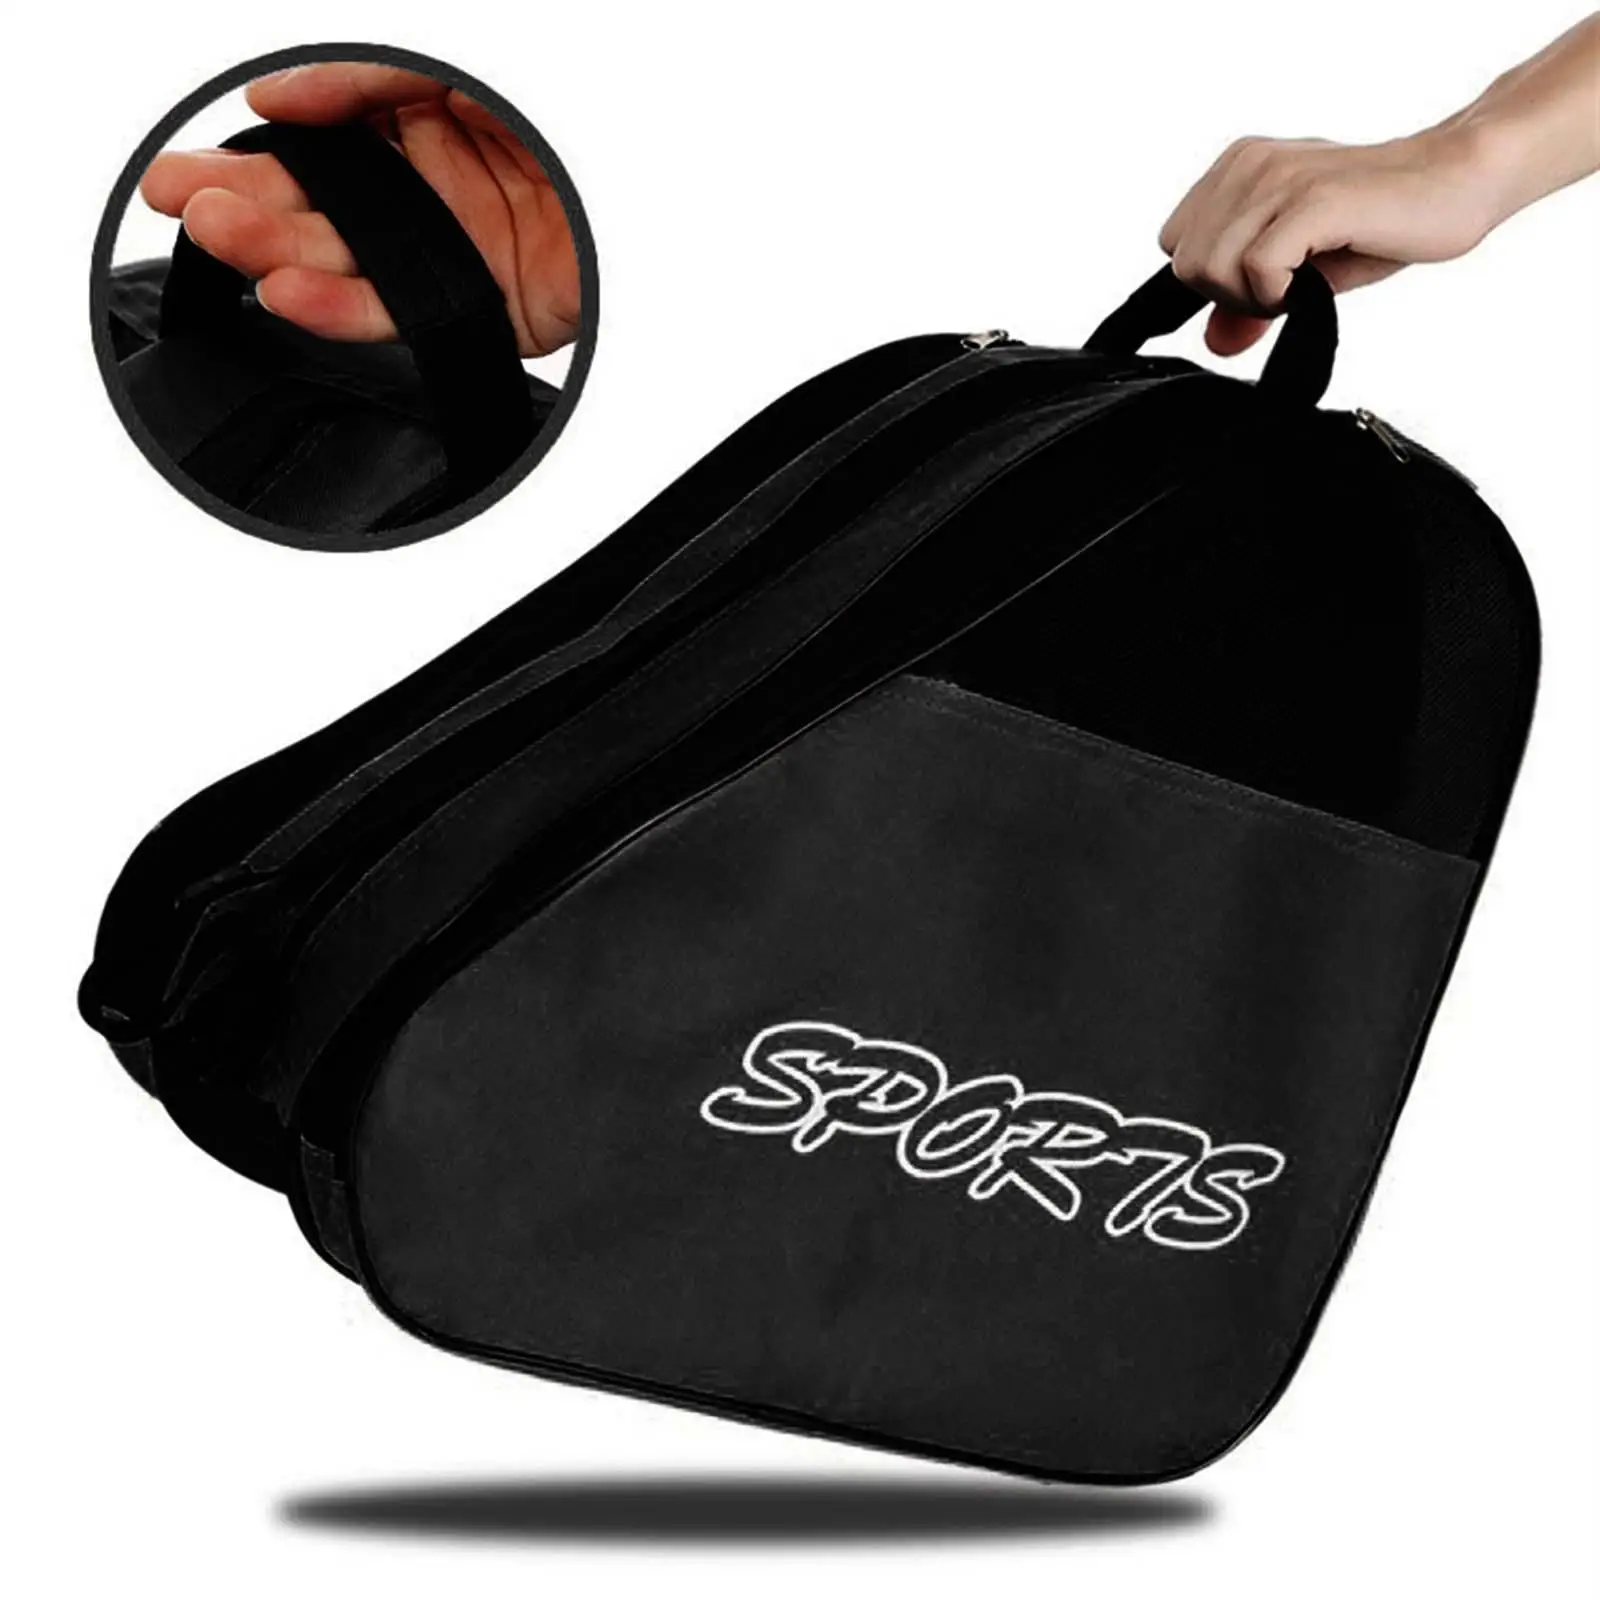 Roller Skates Bag, Inline Skates Bag for Kids, Premium Ice Skate Bags for Child/Adult